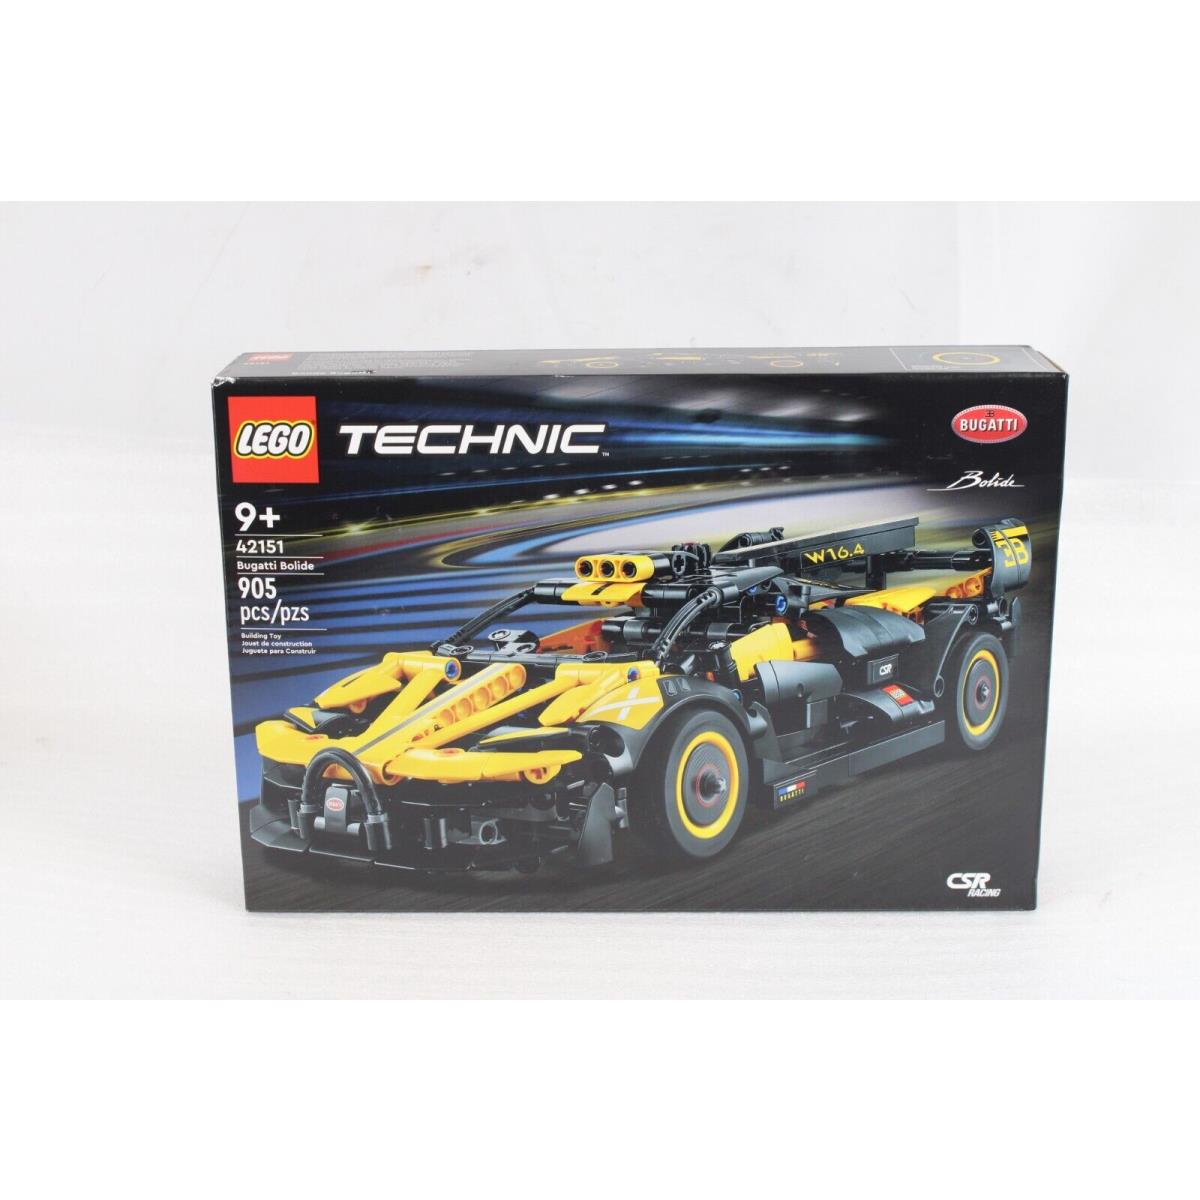 Lego 42151 Technic Bugatti Bolide Trusted Seller Ships Double Boxed